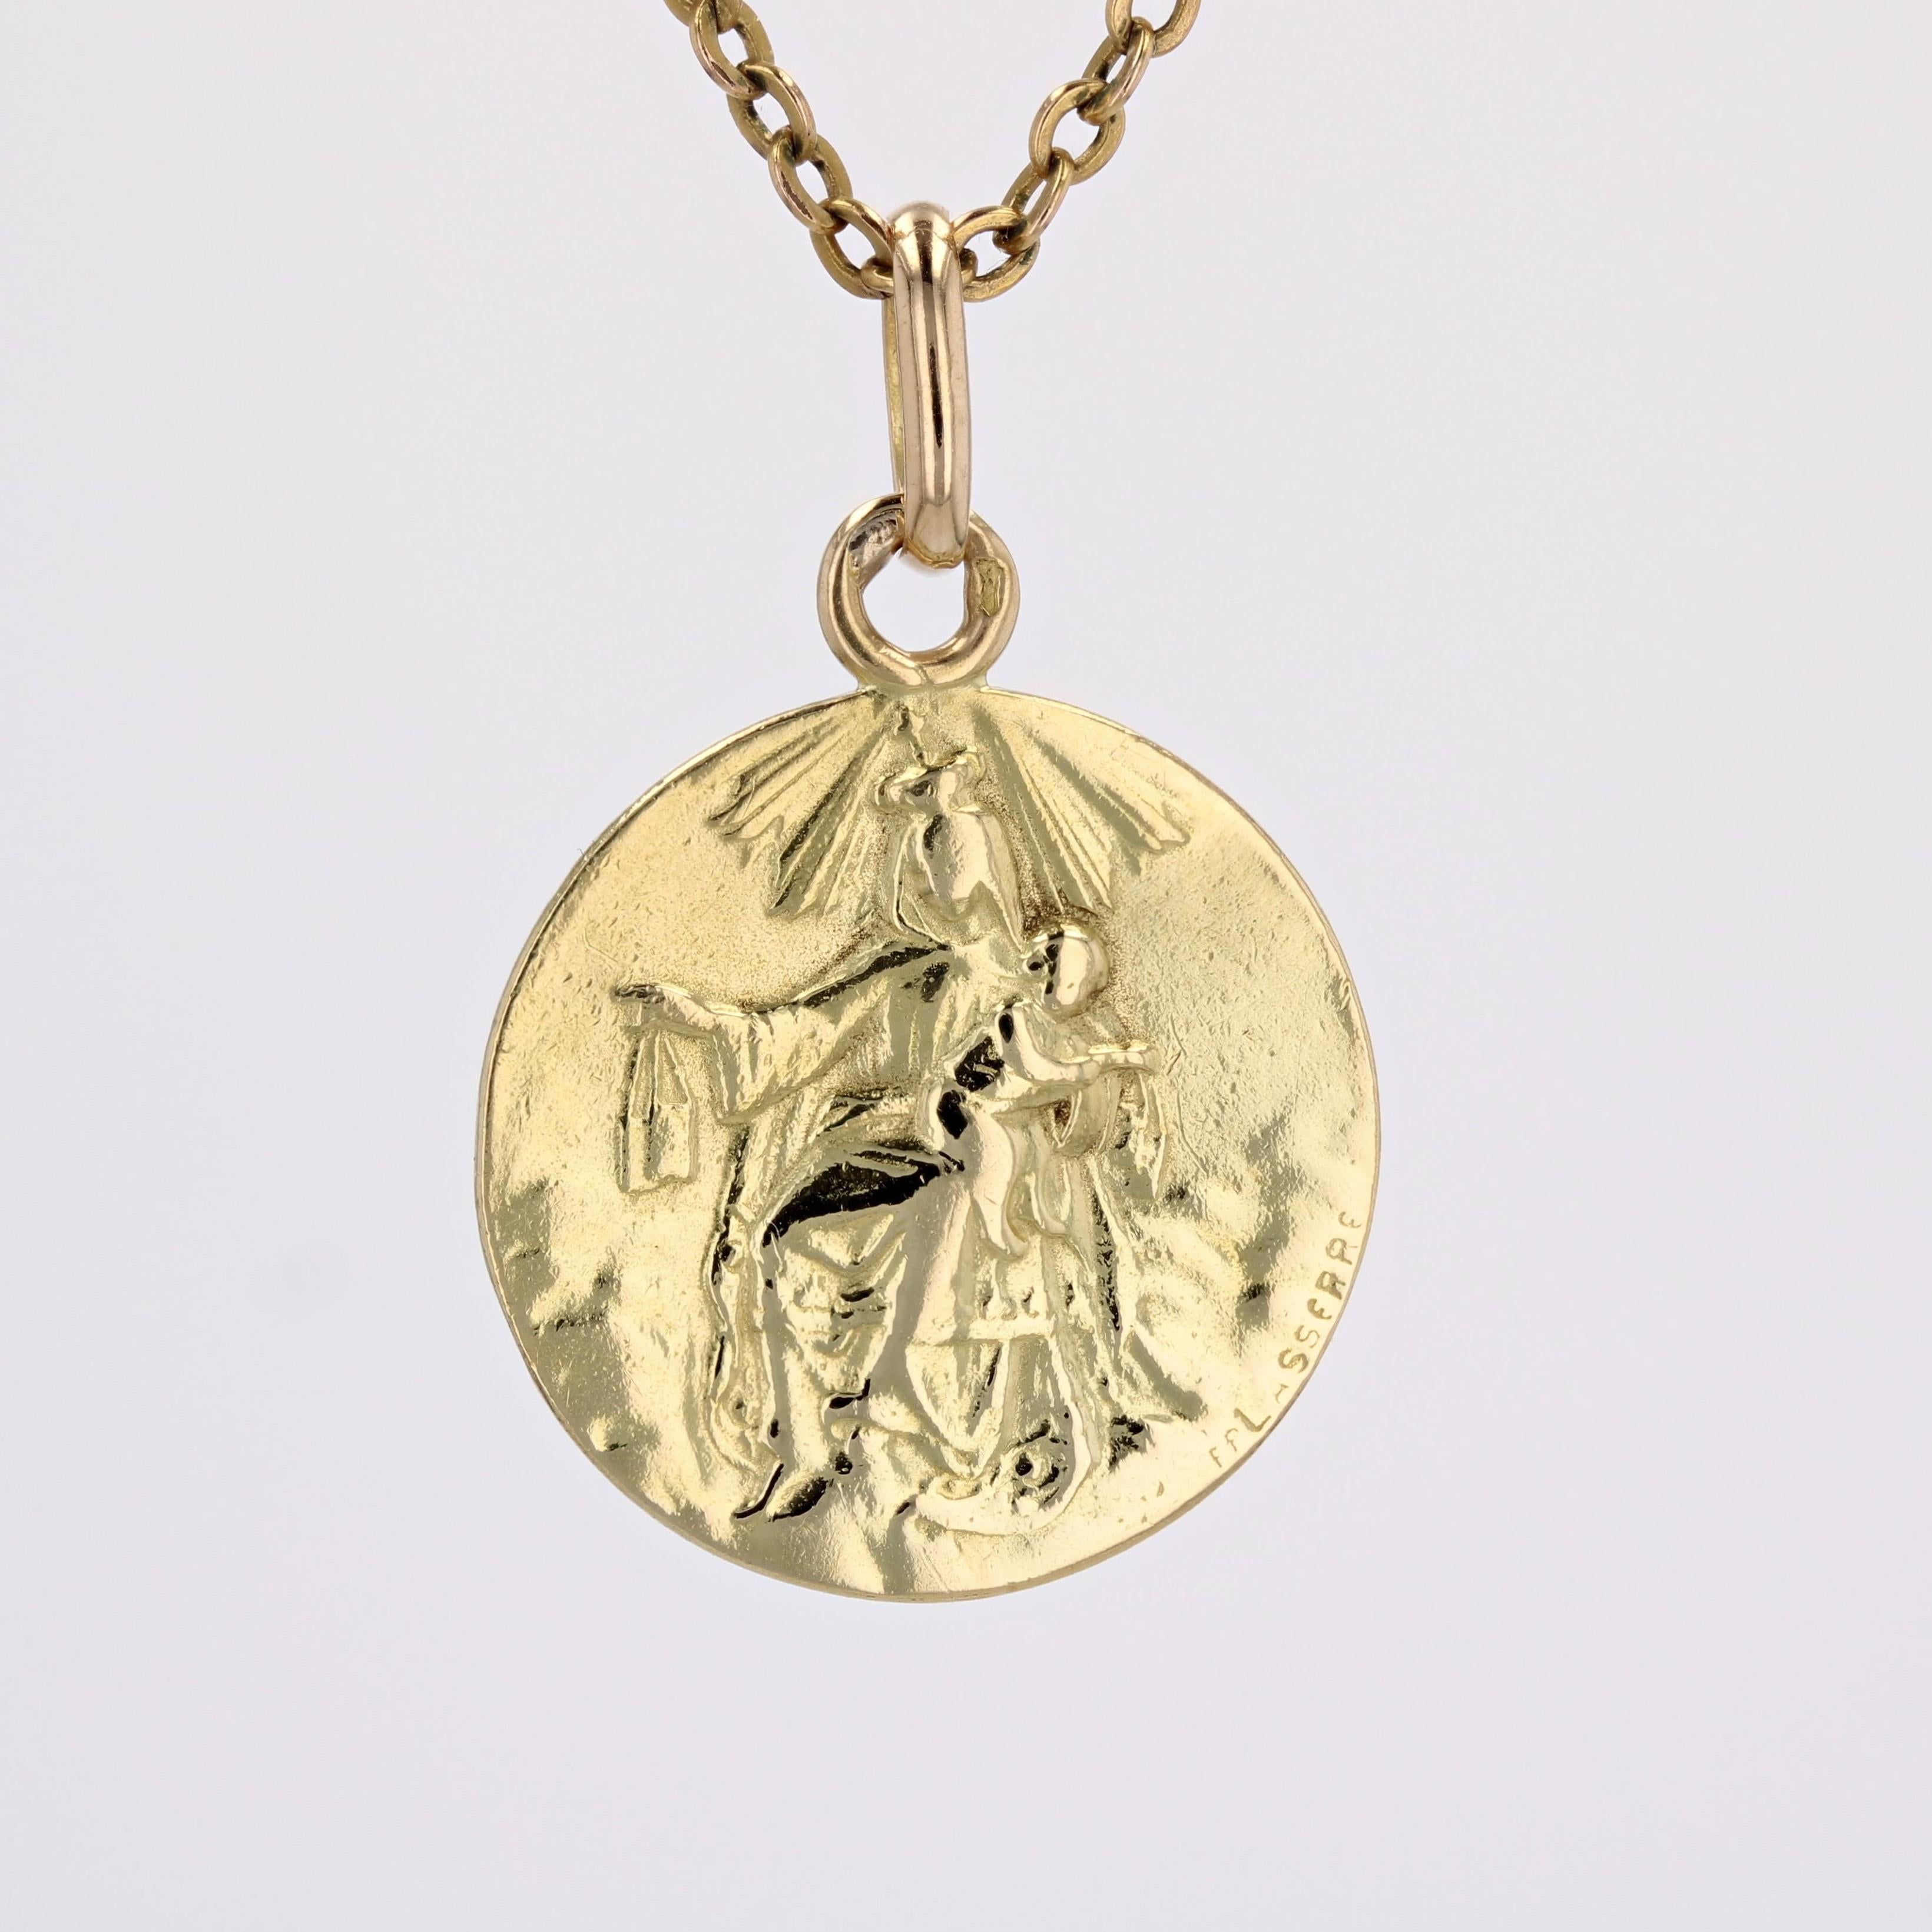 Belle Époque French 20th Century 18 Karat Yellow Gold Signed Lasserre Scapular Medal Pendant